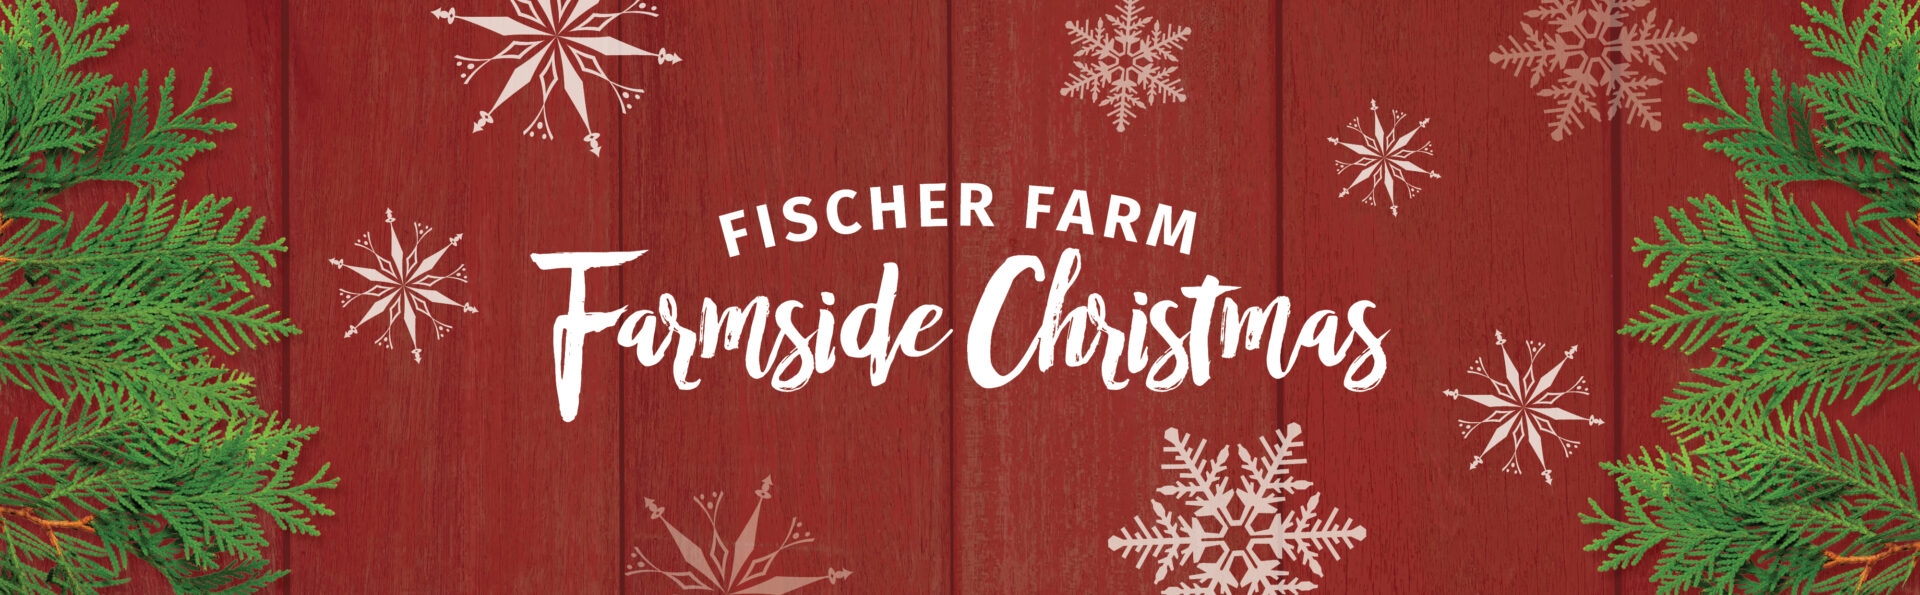 Farmside Christmas at Fischer Farm